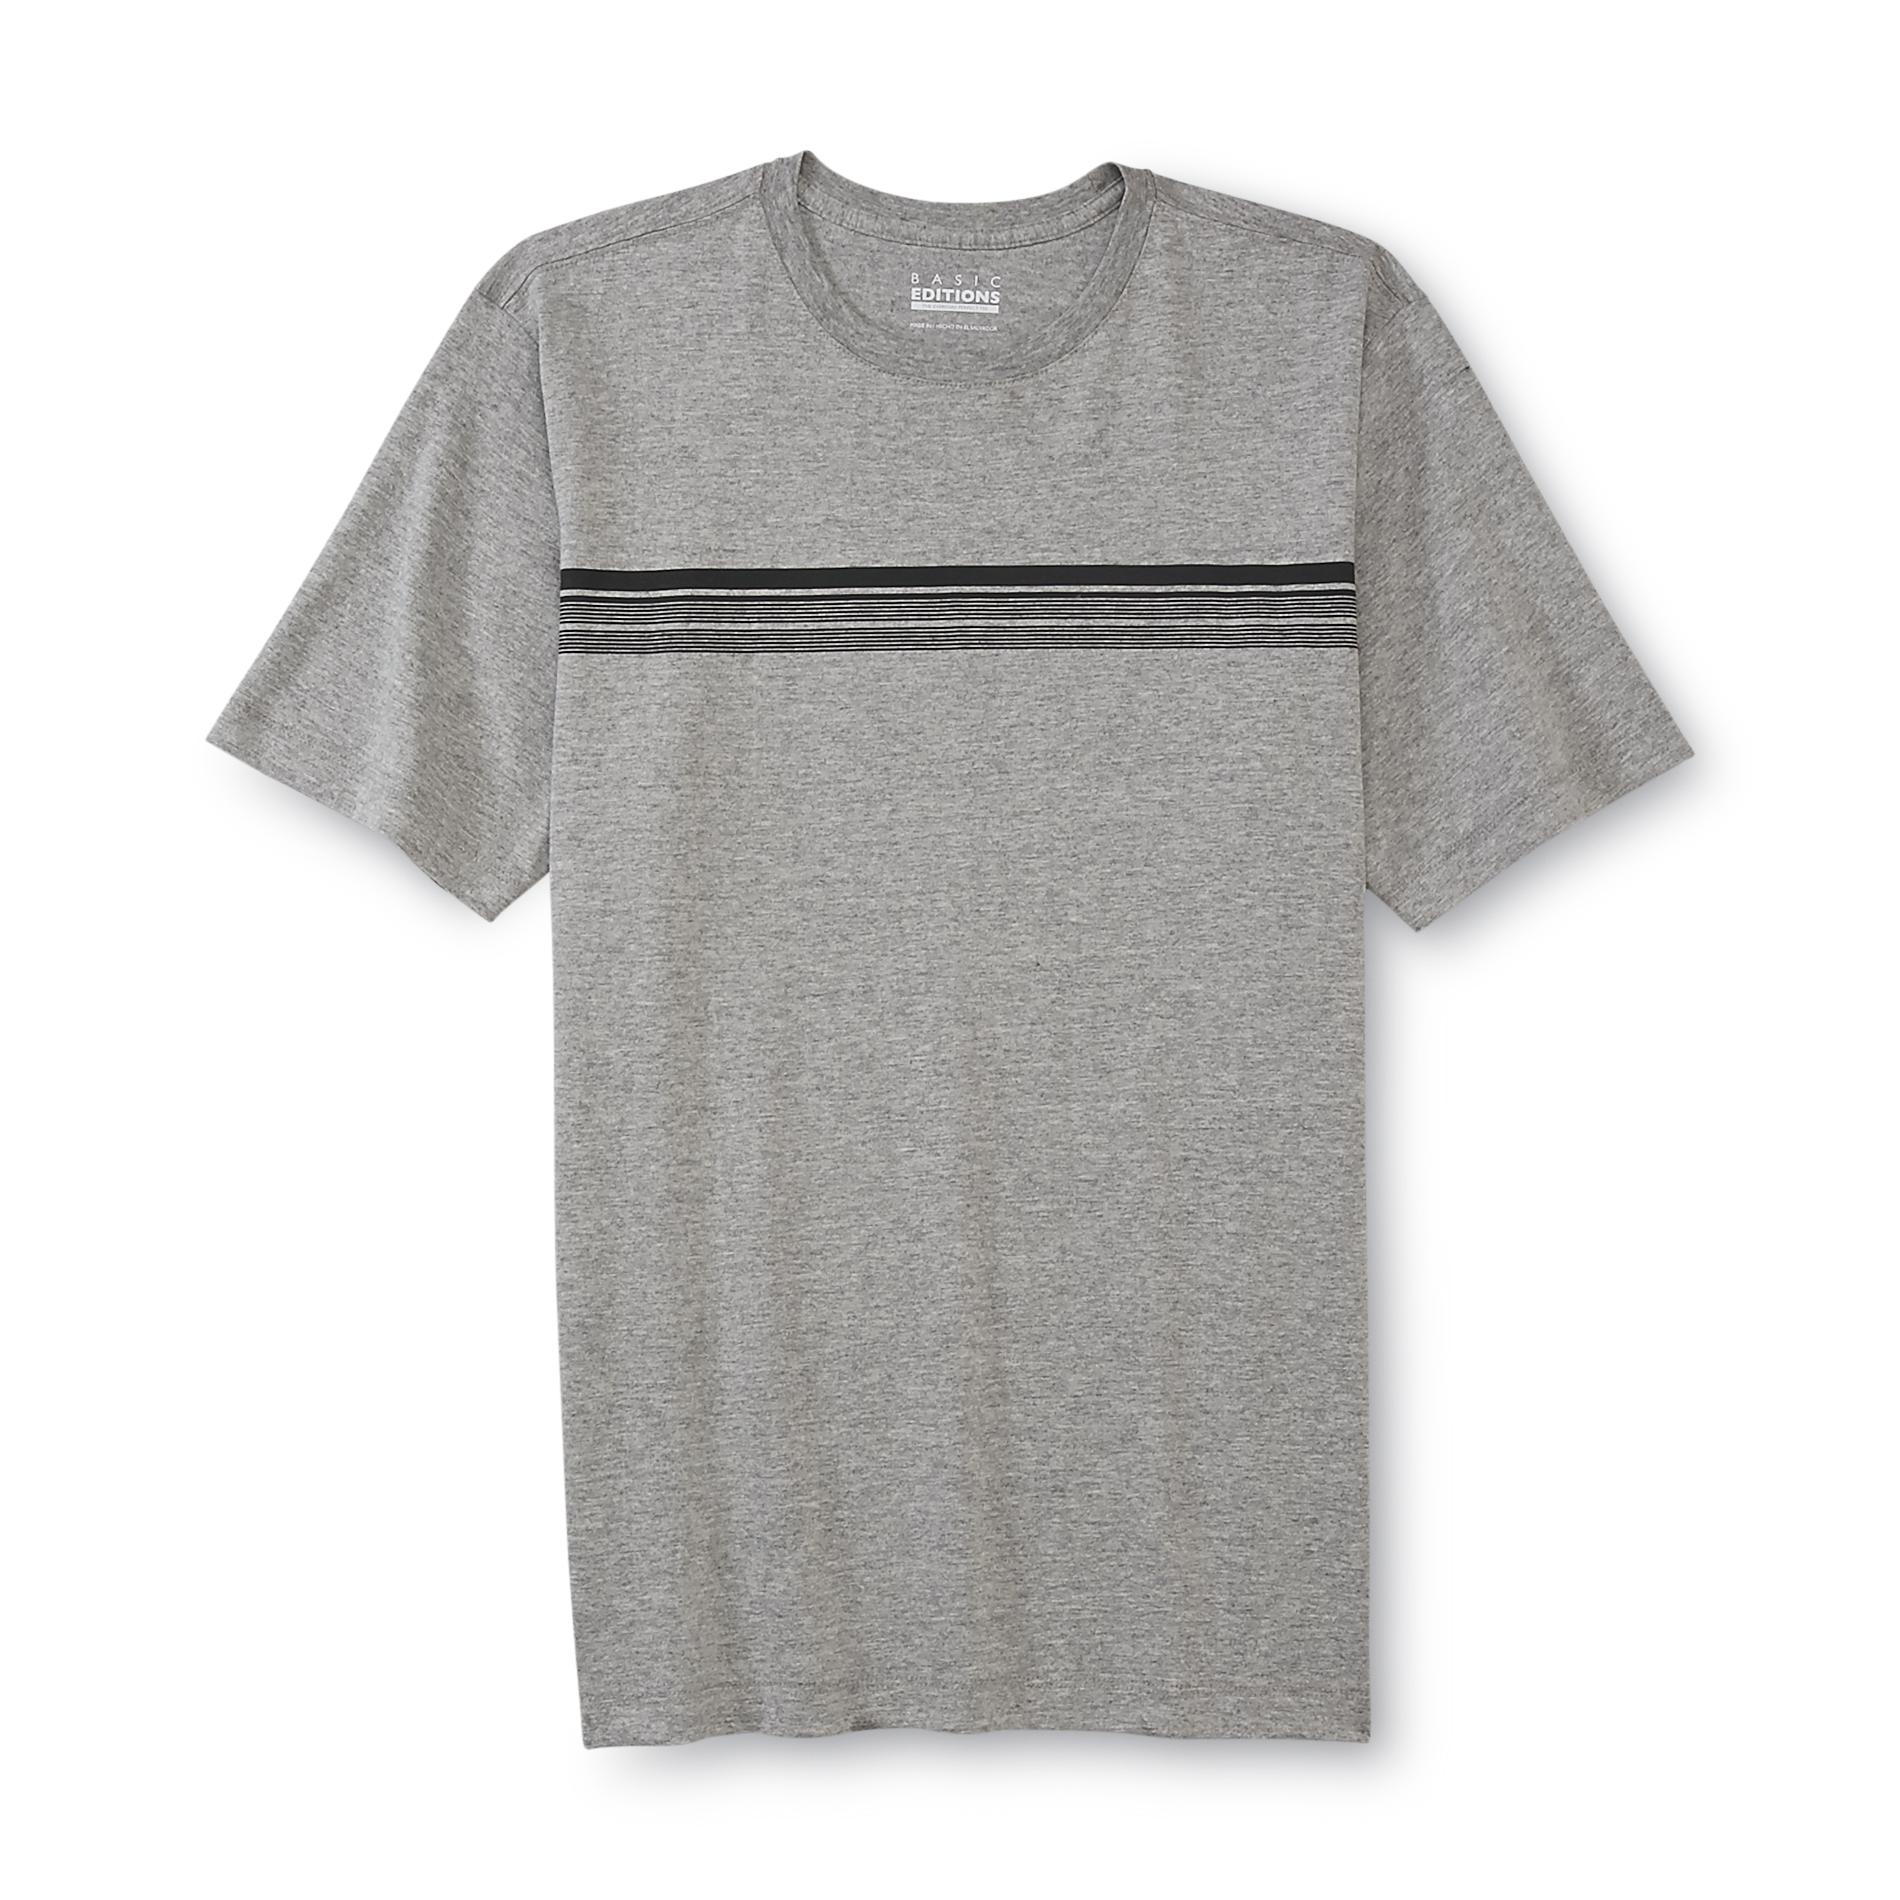 Basic Editions Men's Big & Tall Crew Neck T-Shirt - Heathered & Striped